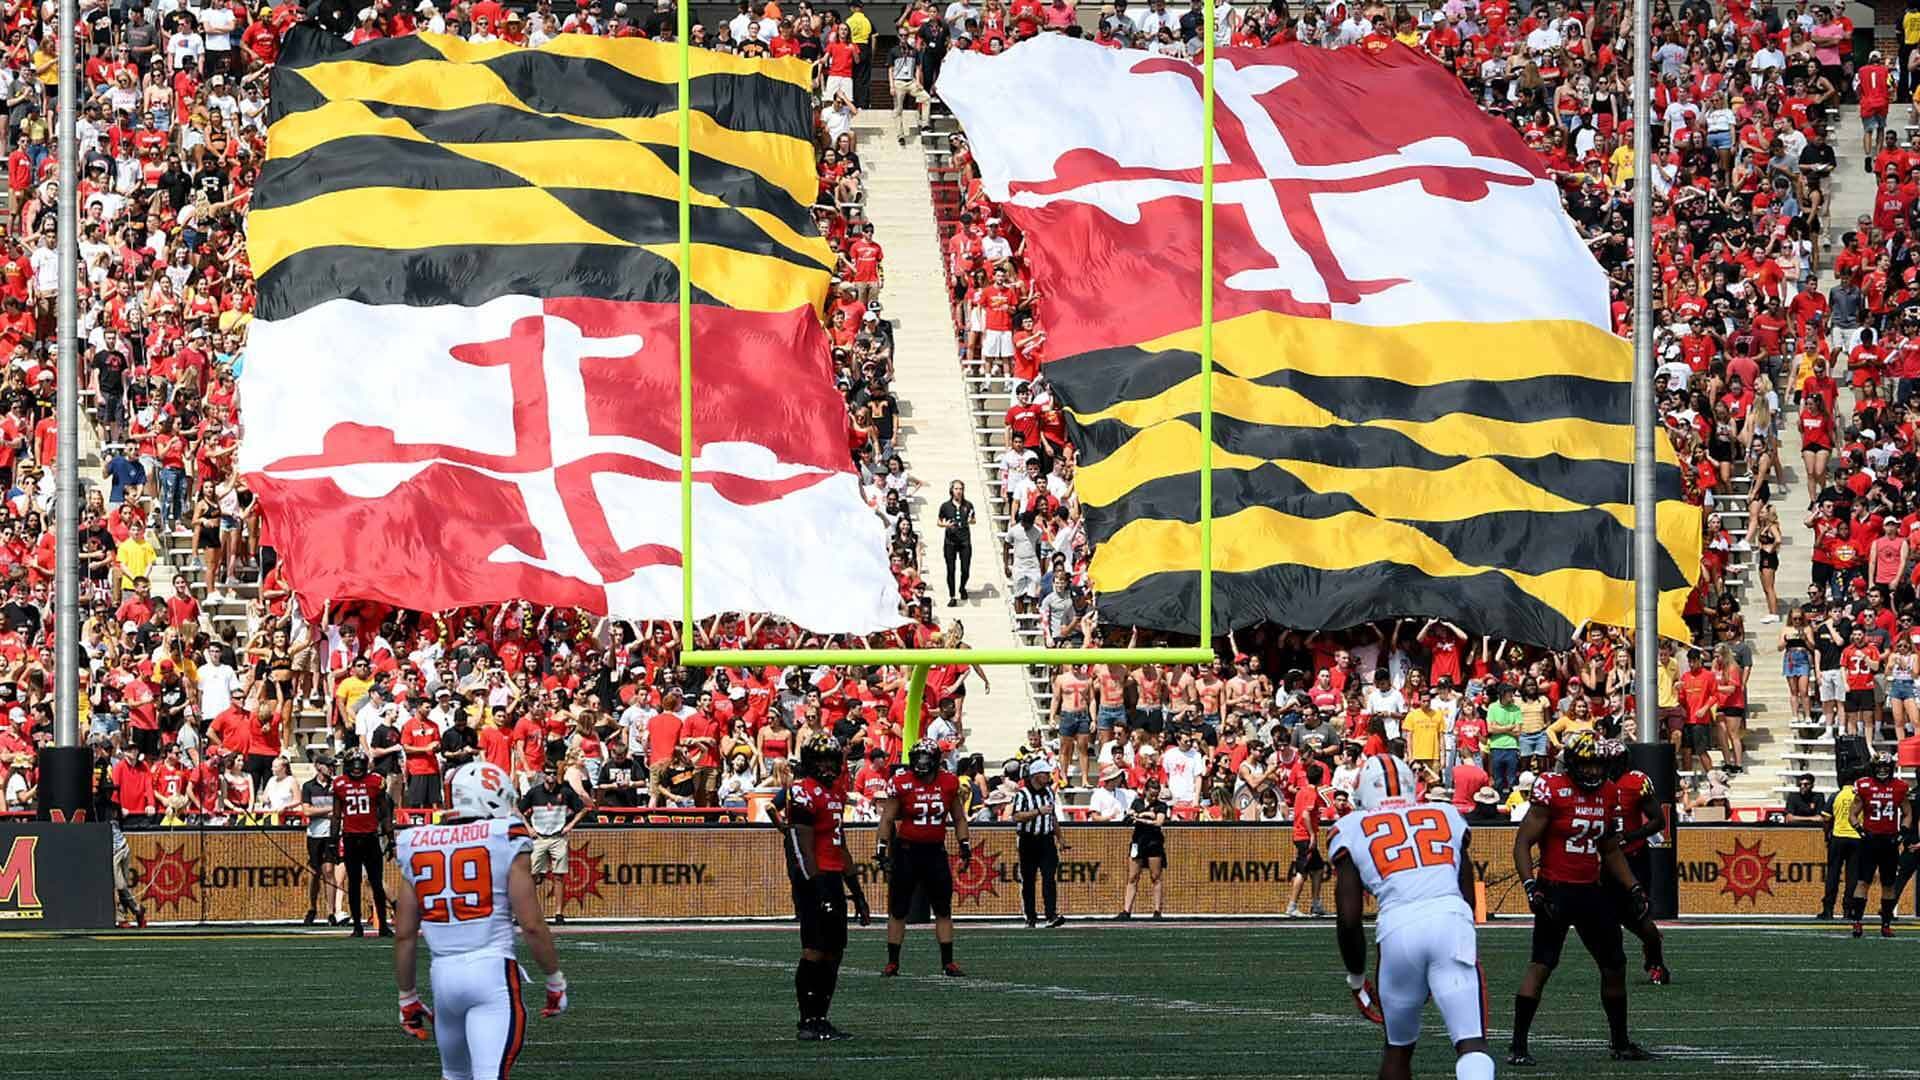 Football game at Maryland Stadium